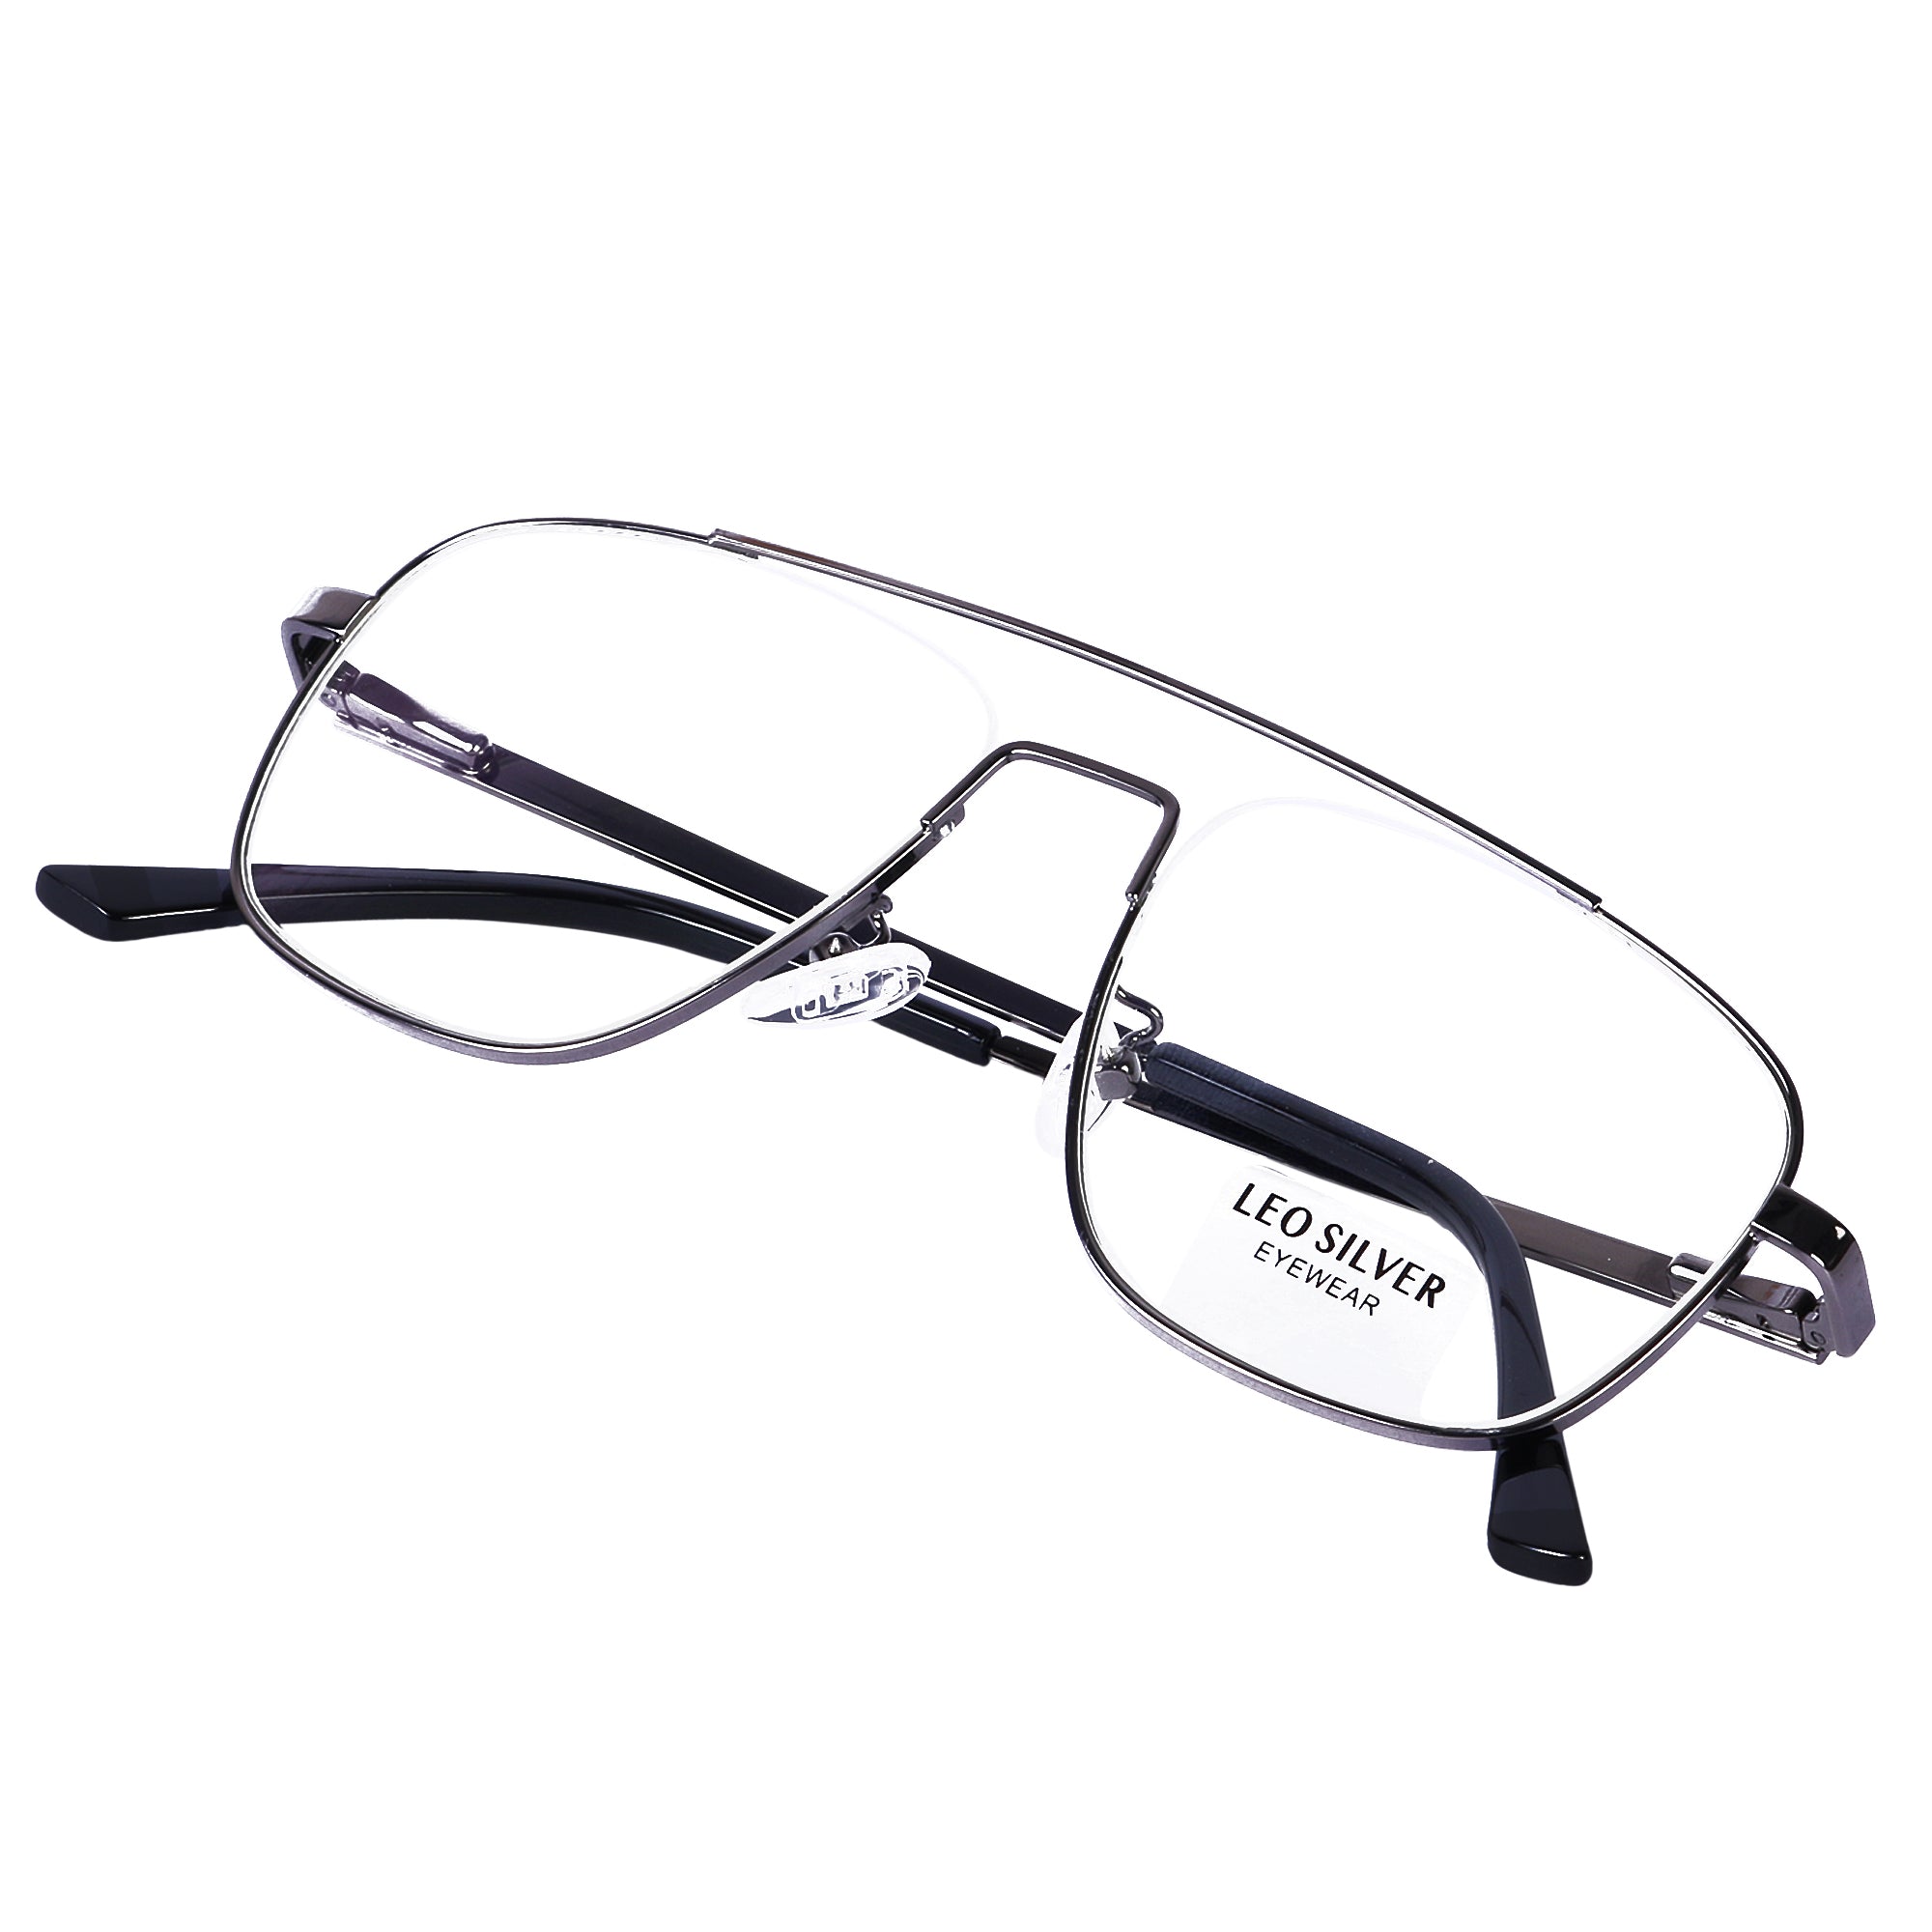 Grey Square Metal Eyeglasses -
L2063